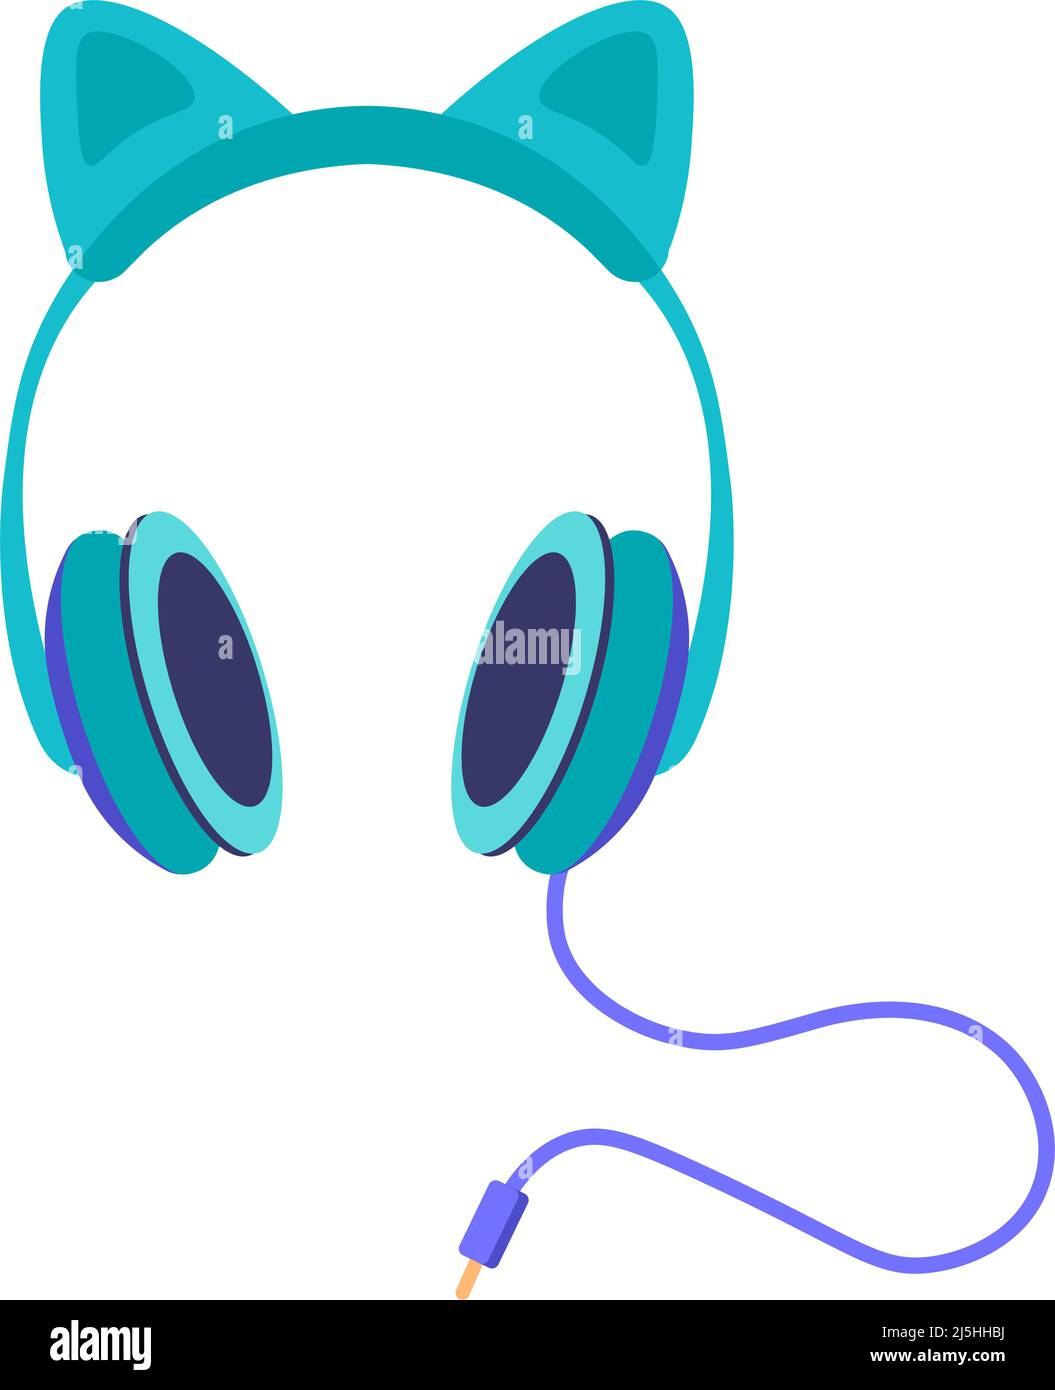 Cute headphones with cat ears, gadget accessory Stock Vector